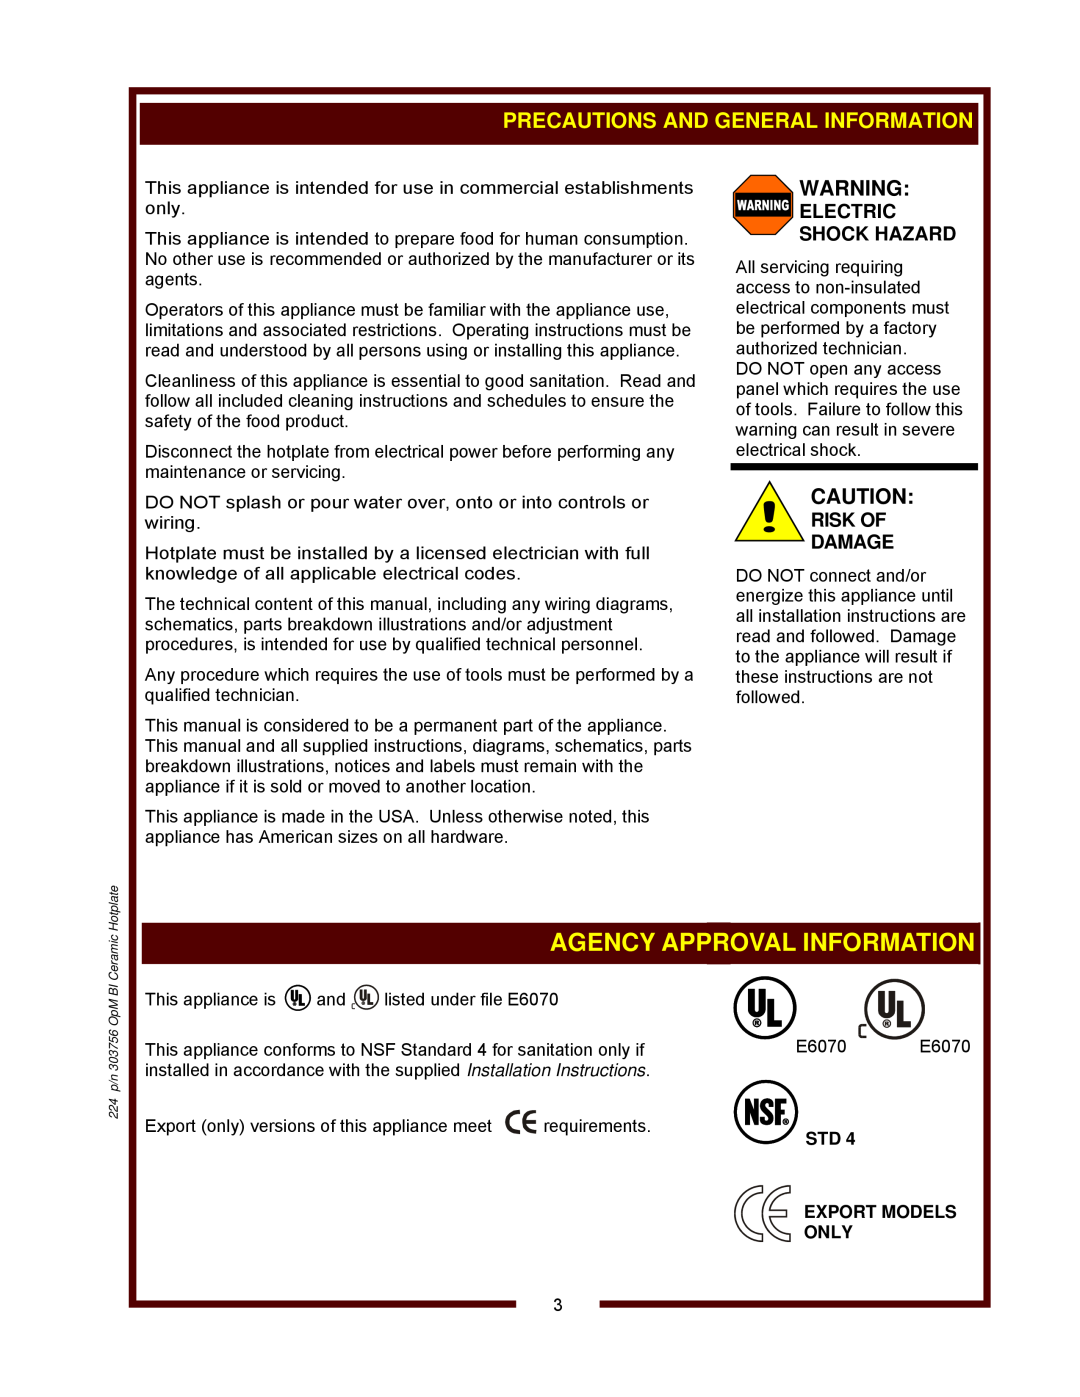 Wells HC-1006 operation manual Std Export Models Only, Agency Approval Information, 224 p/n 303756 OpM BI Ceramic Hotplate 